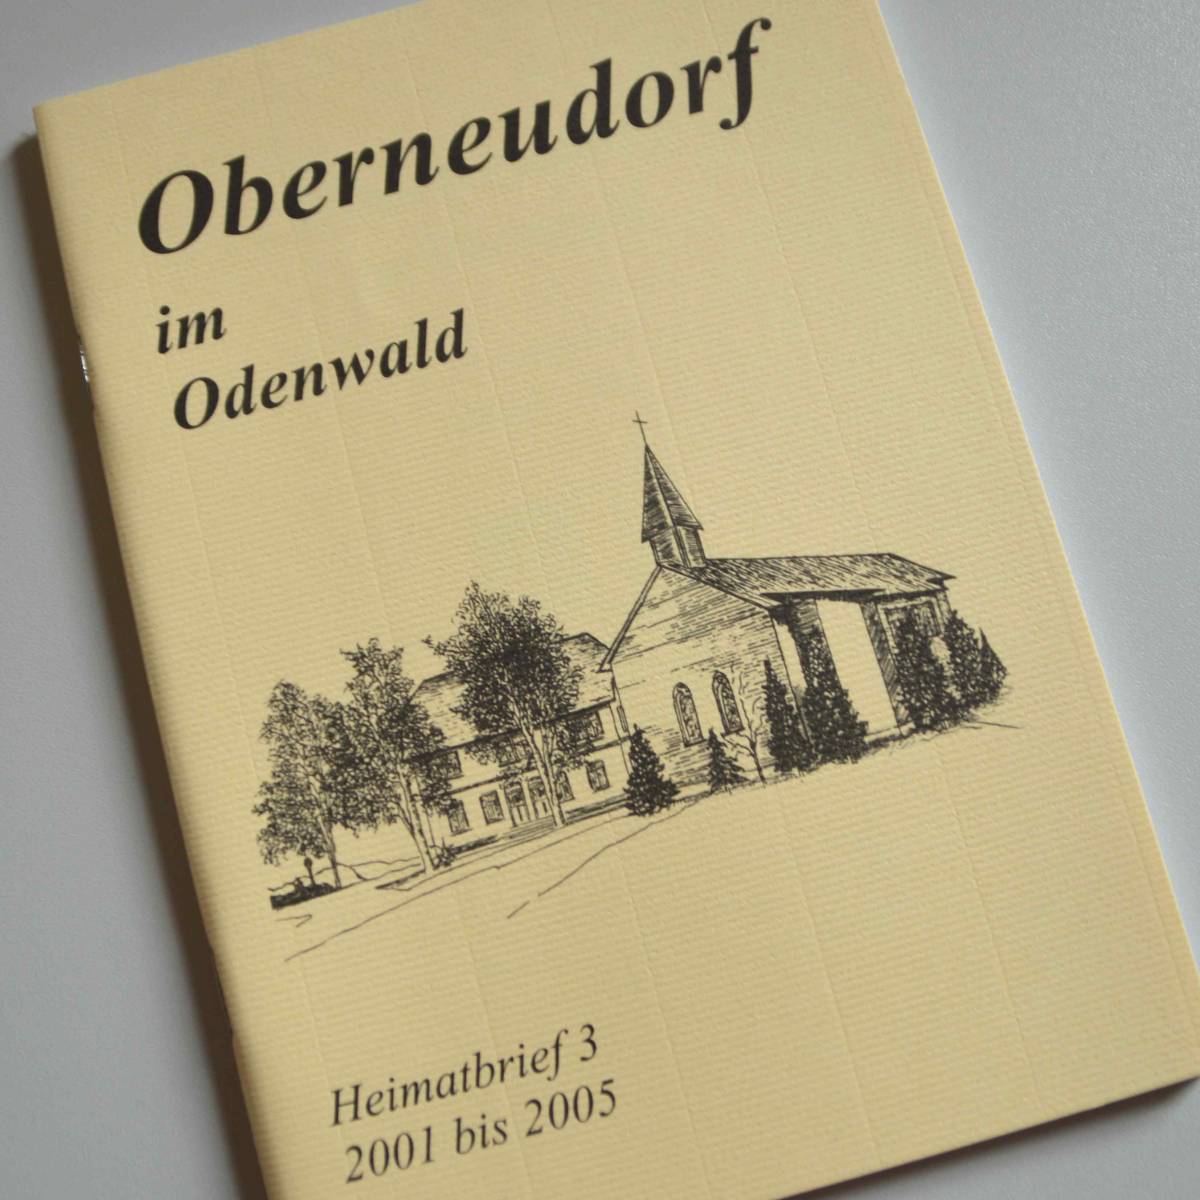 Oberneudorf im Odenwald Heimatbrief 3